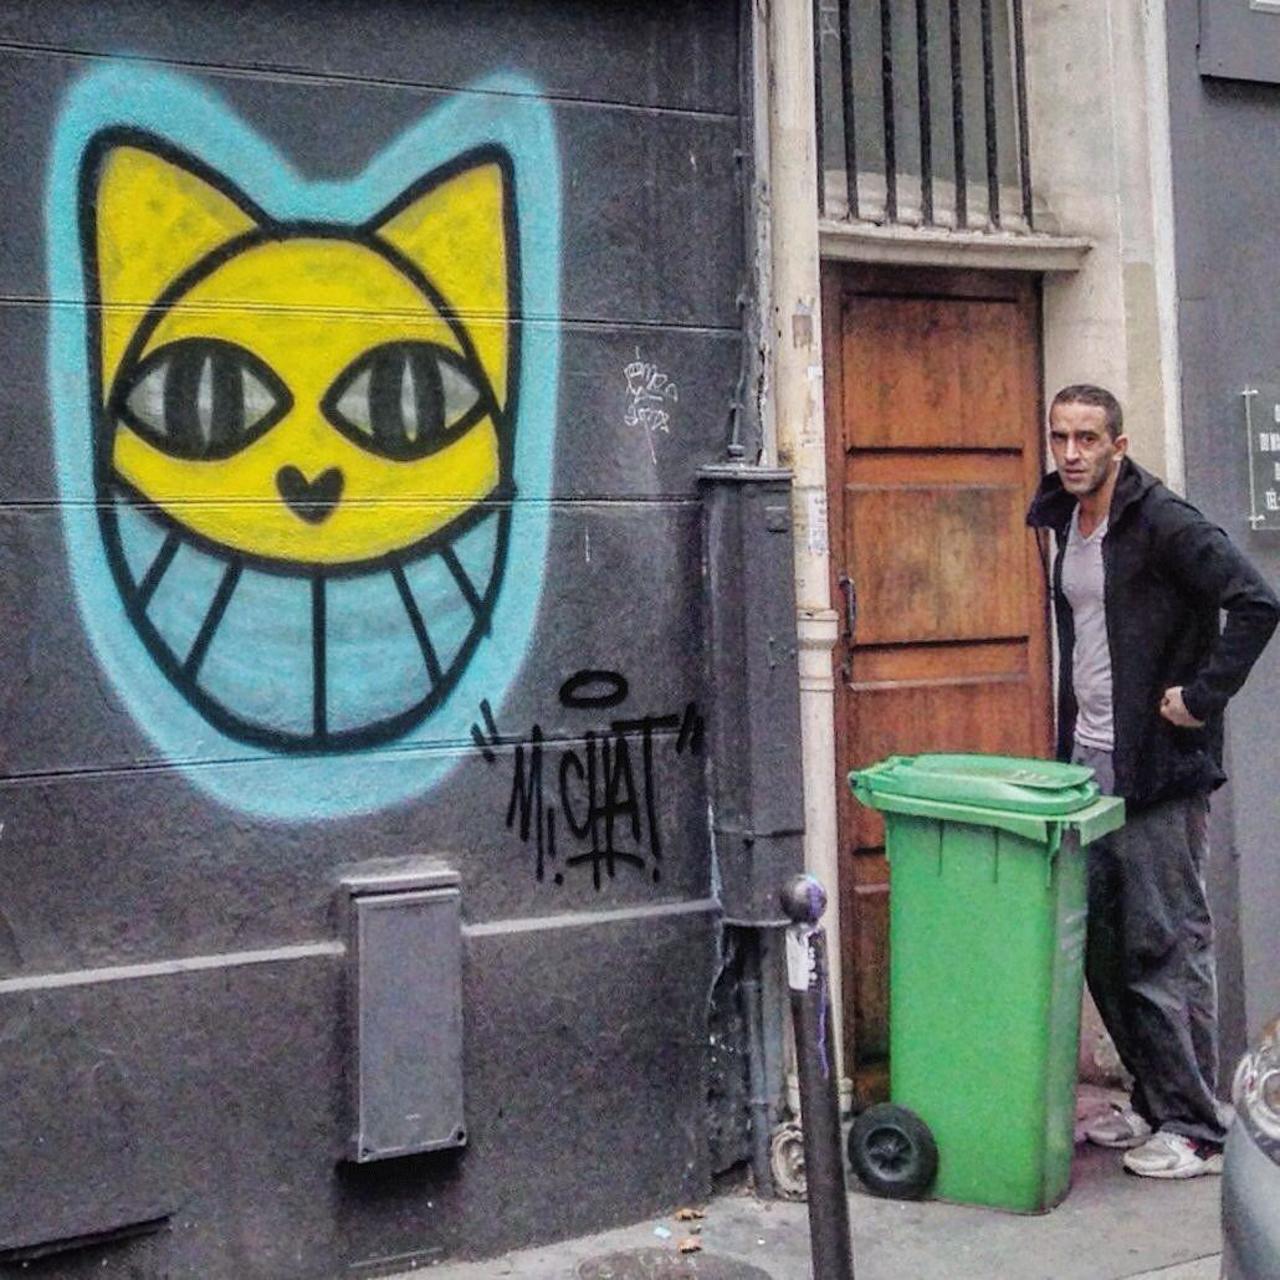 #Paris #graffiti photo by @joecoolpix http://ift.tt/1YHH0of #StreetArt http://t.co/VGx7ylkJxY